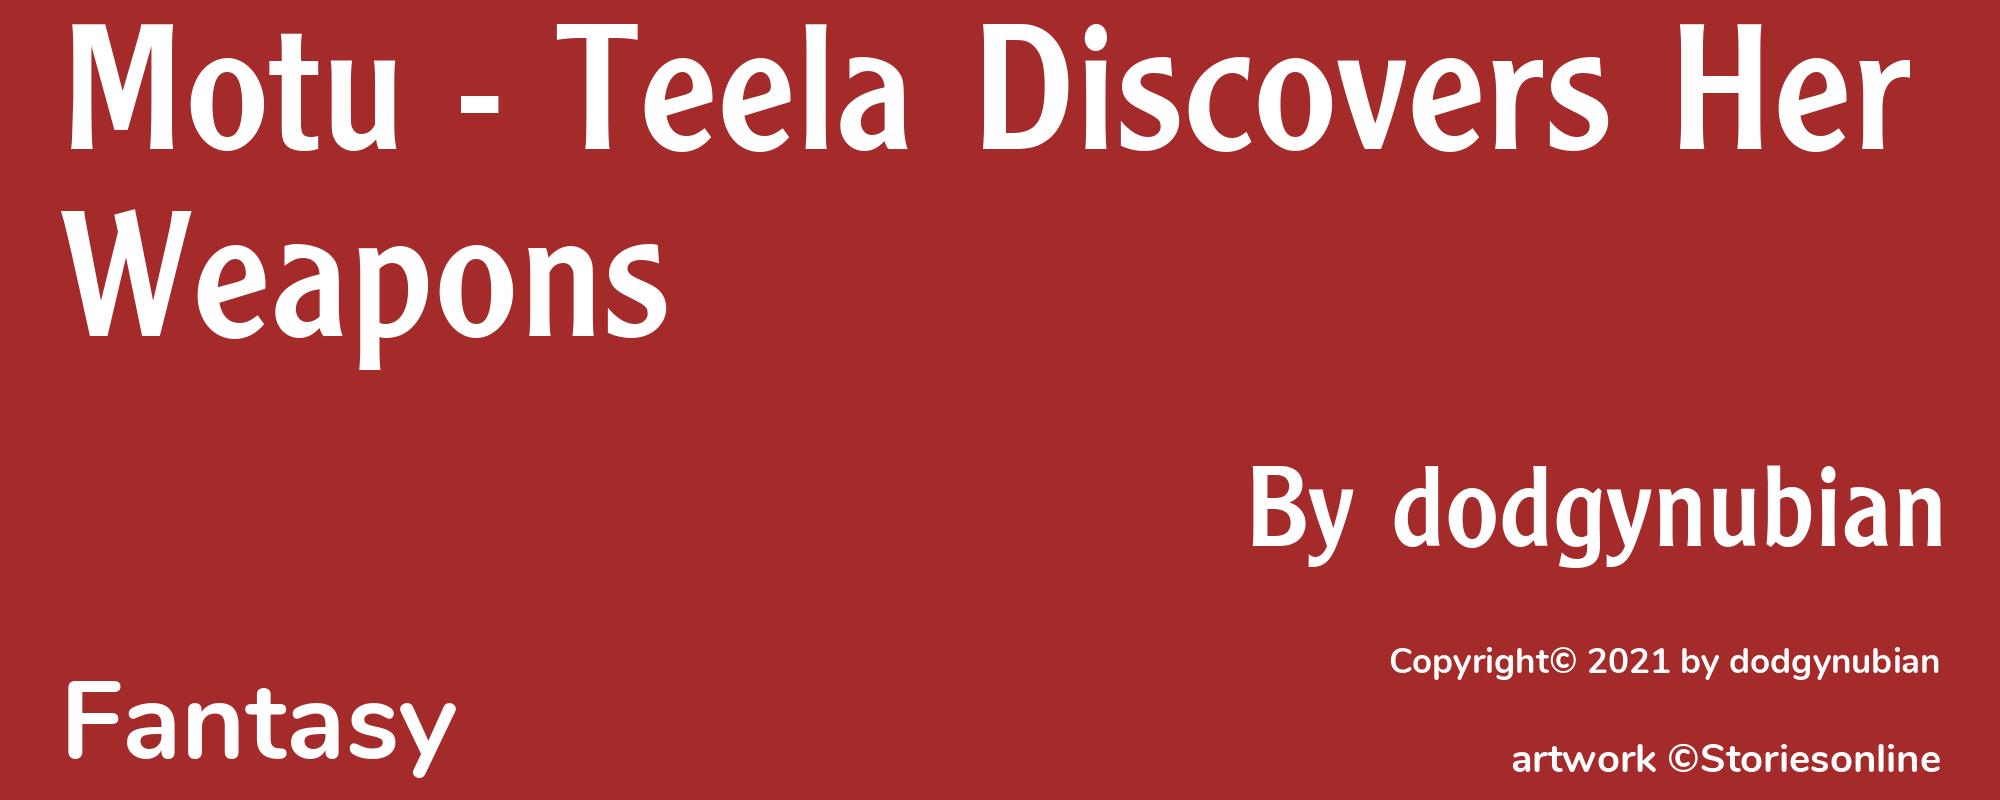 Motu - Teela Discovers Her Weapons - Cover